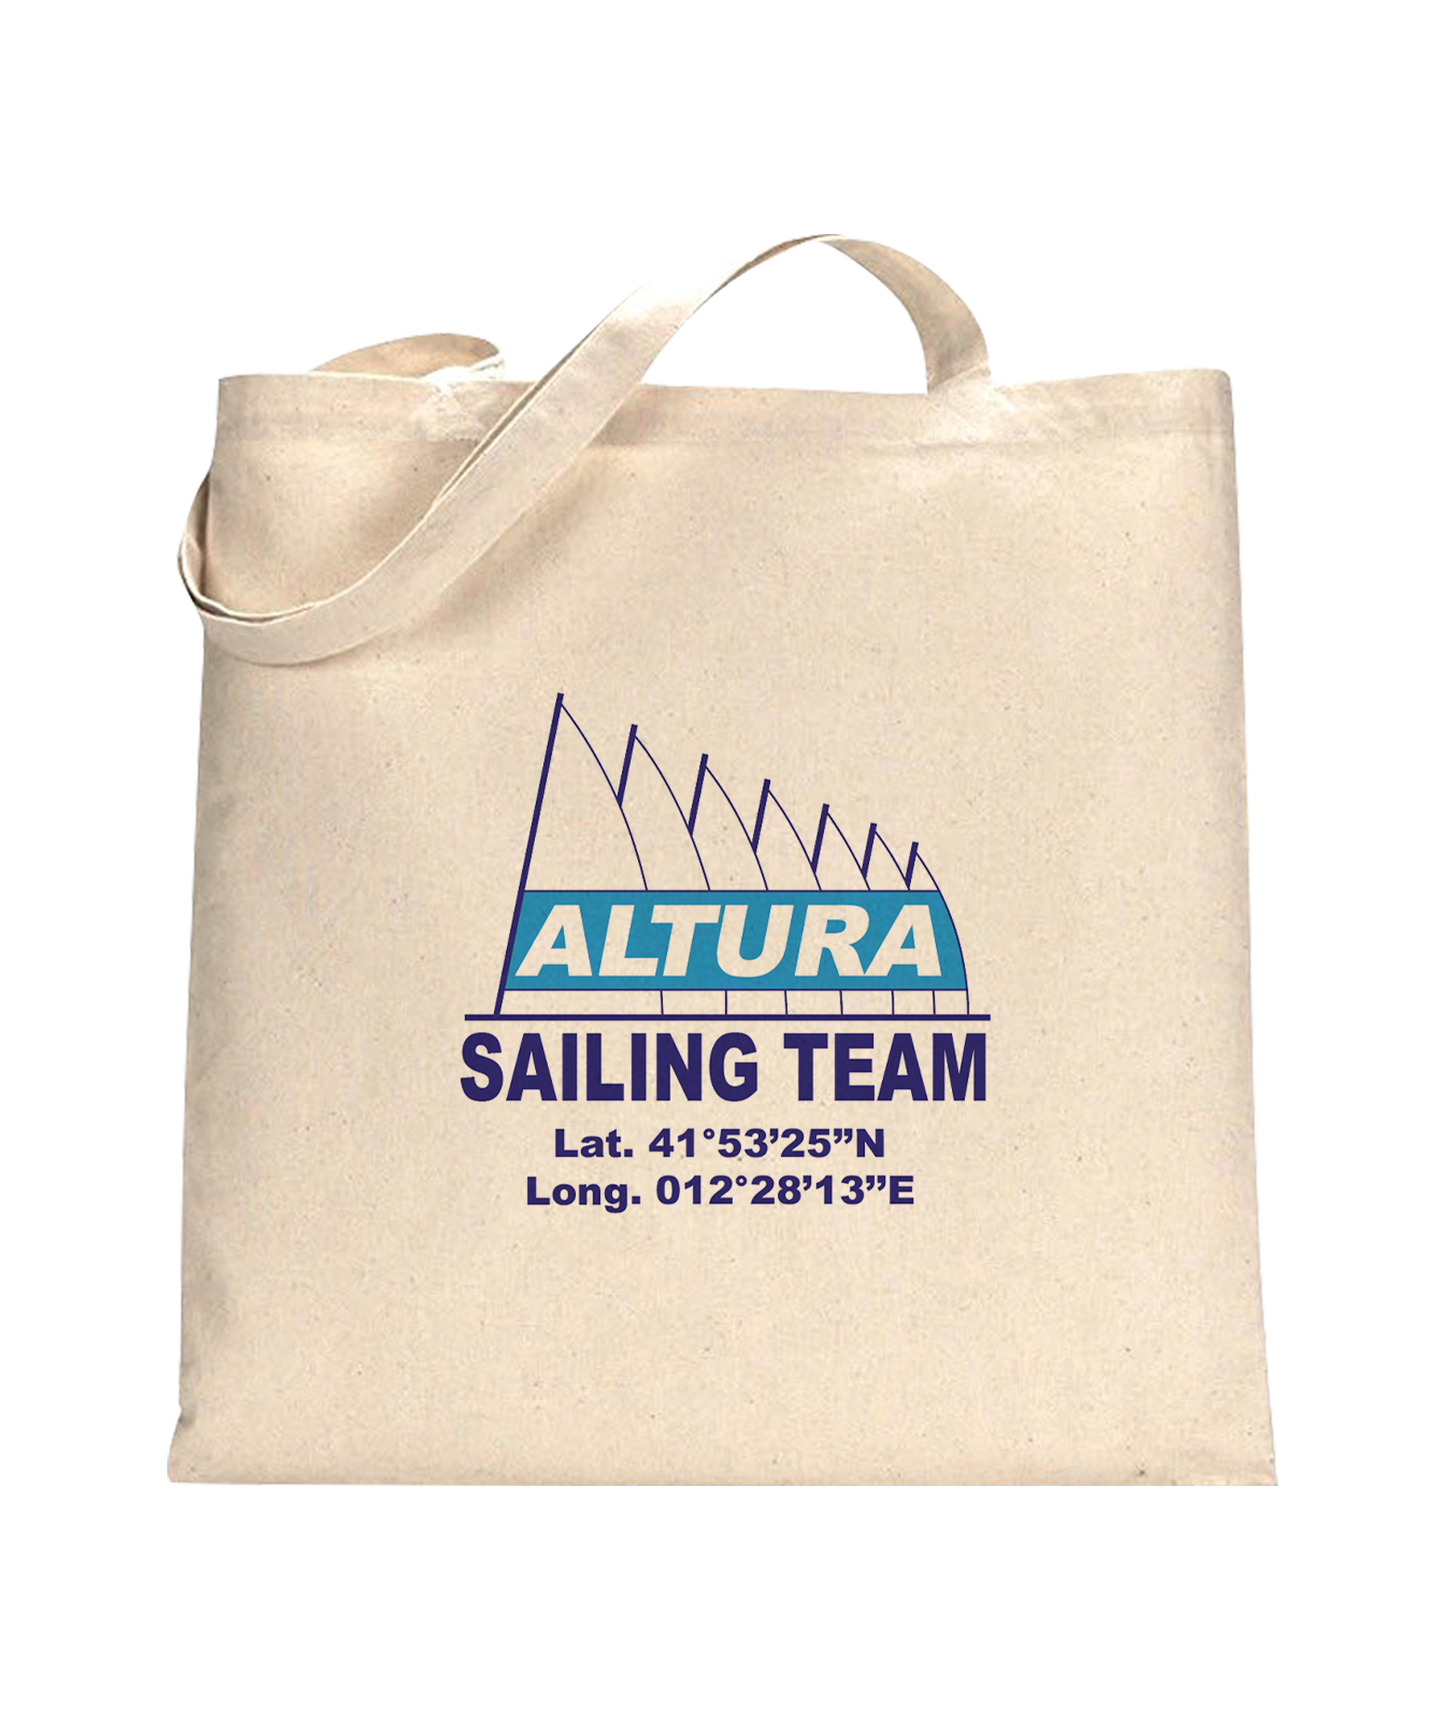 Borsa Altura Sailing Team